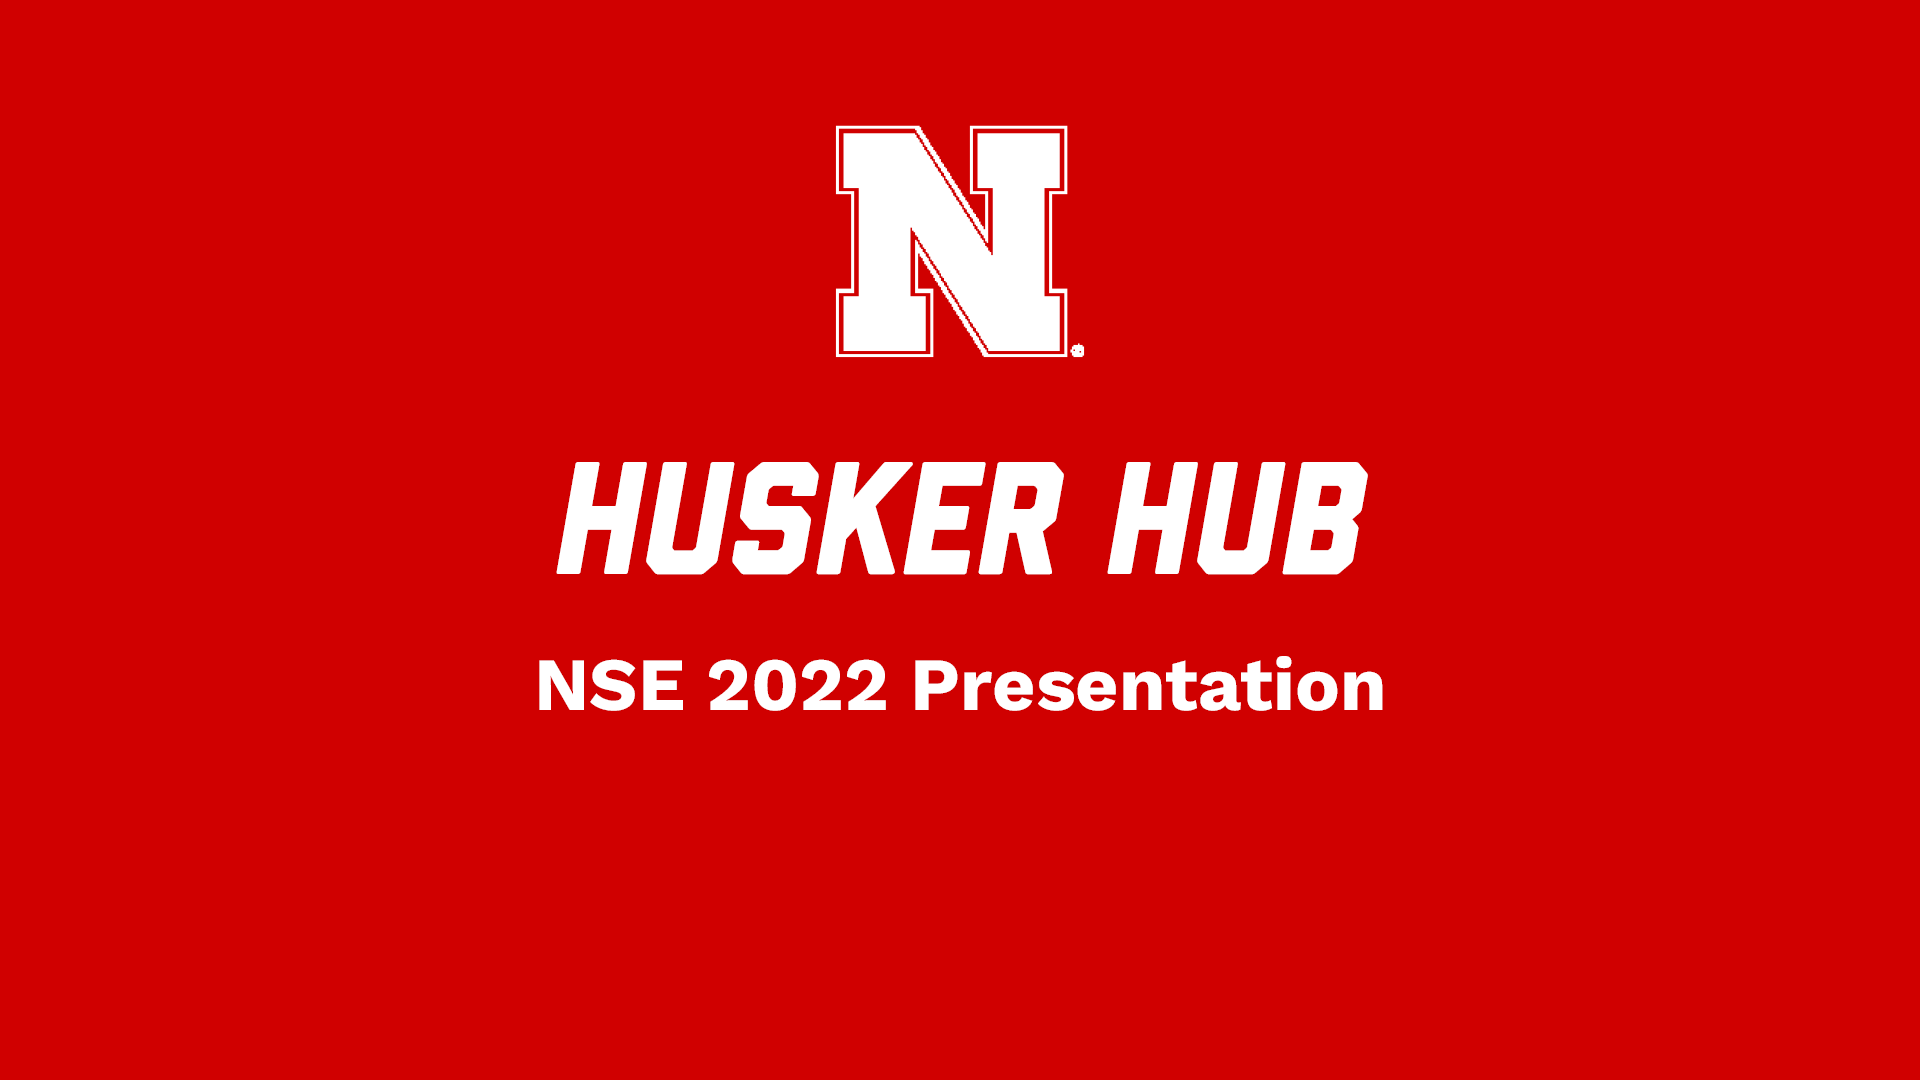 Husker Hub NSE 2022 Presentation